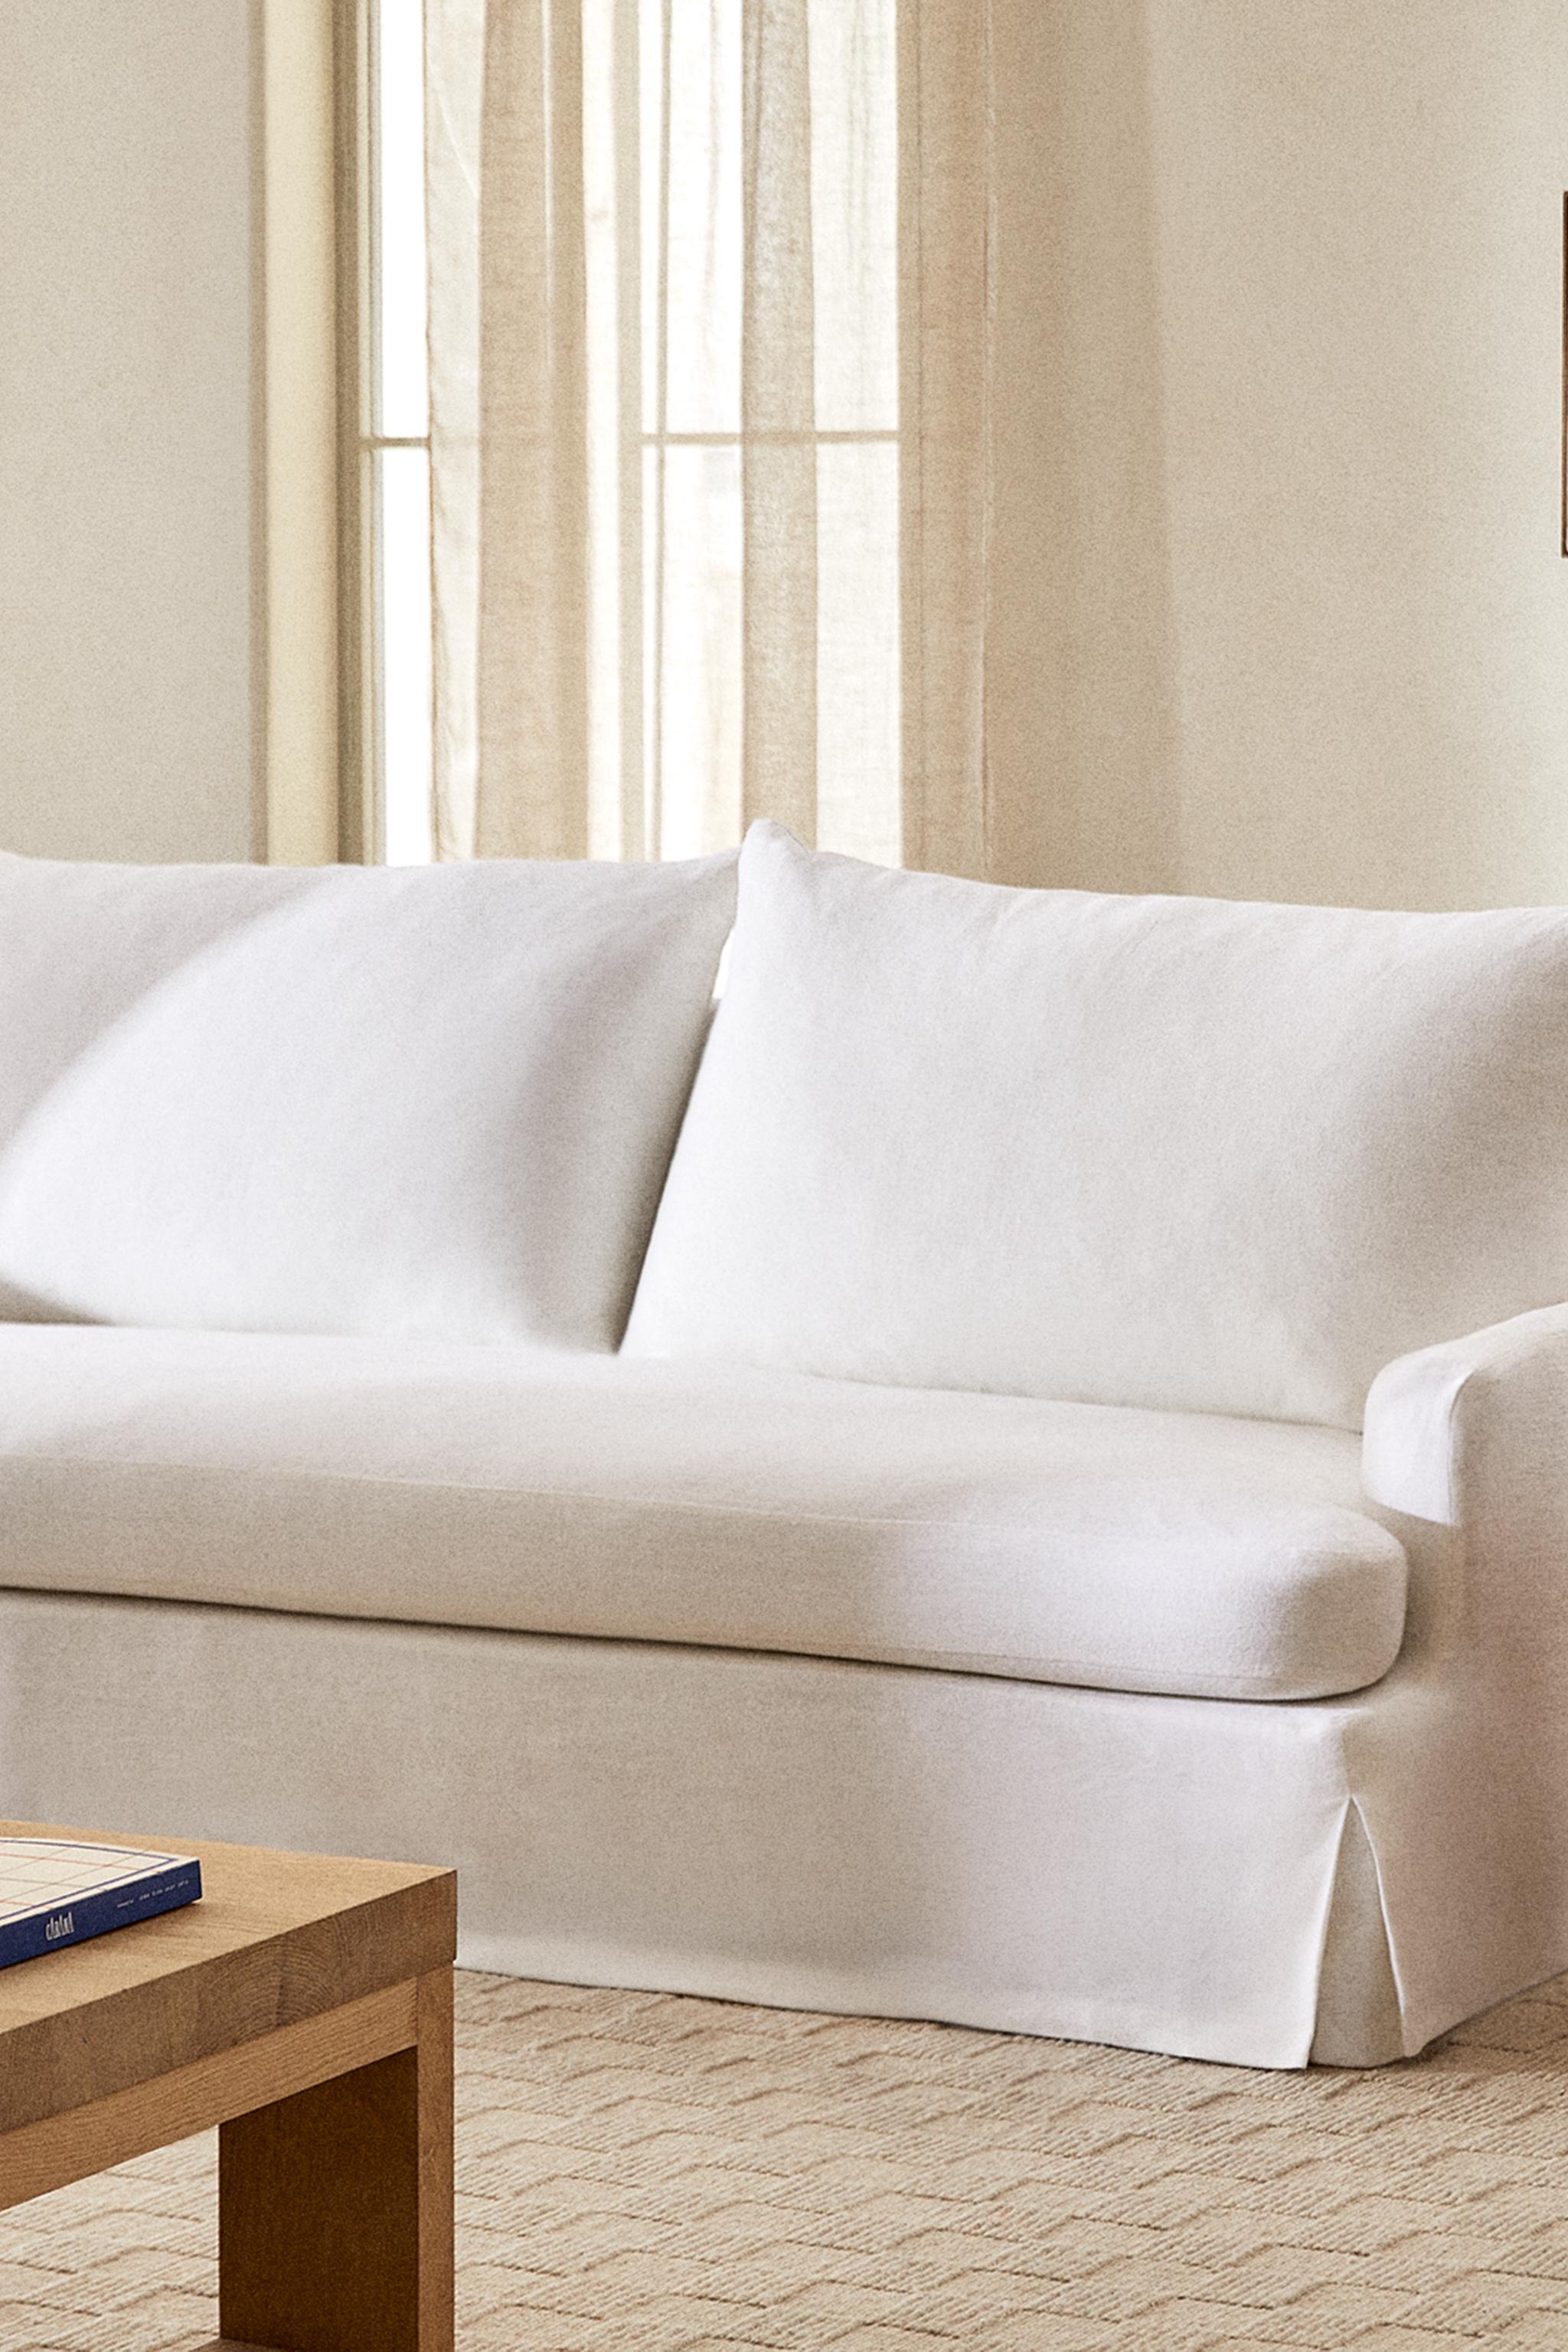 46.33% OFF on U-RO DECOR Zara Sofa Bed 2 Seats With 2 Pillows Yellow